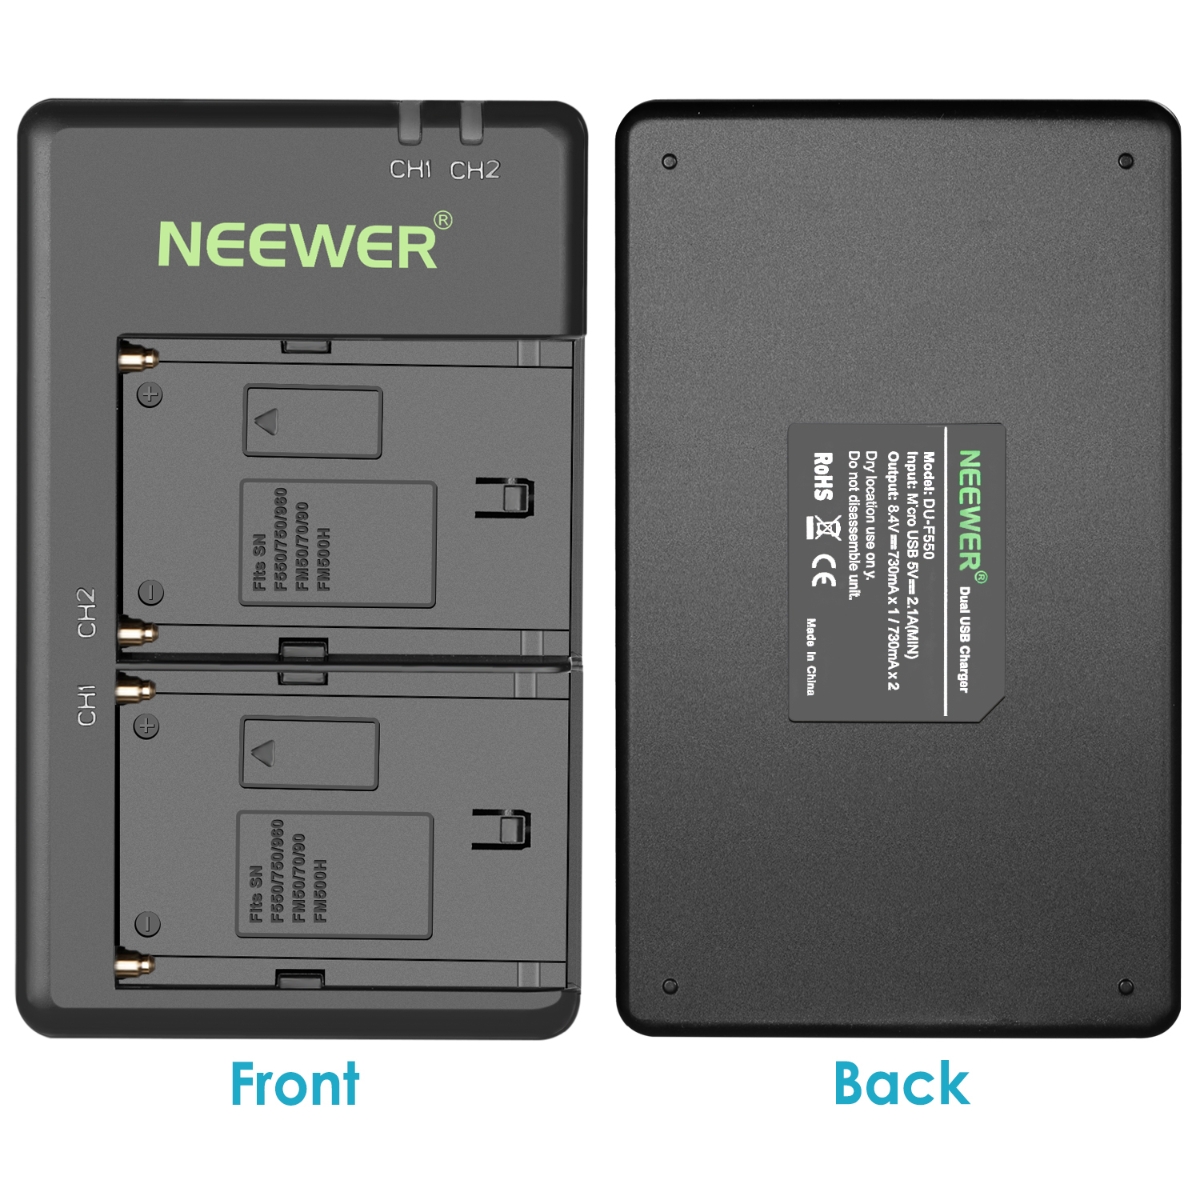 NEEWER　NL660S　+バッテリーセット